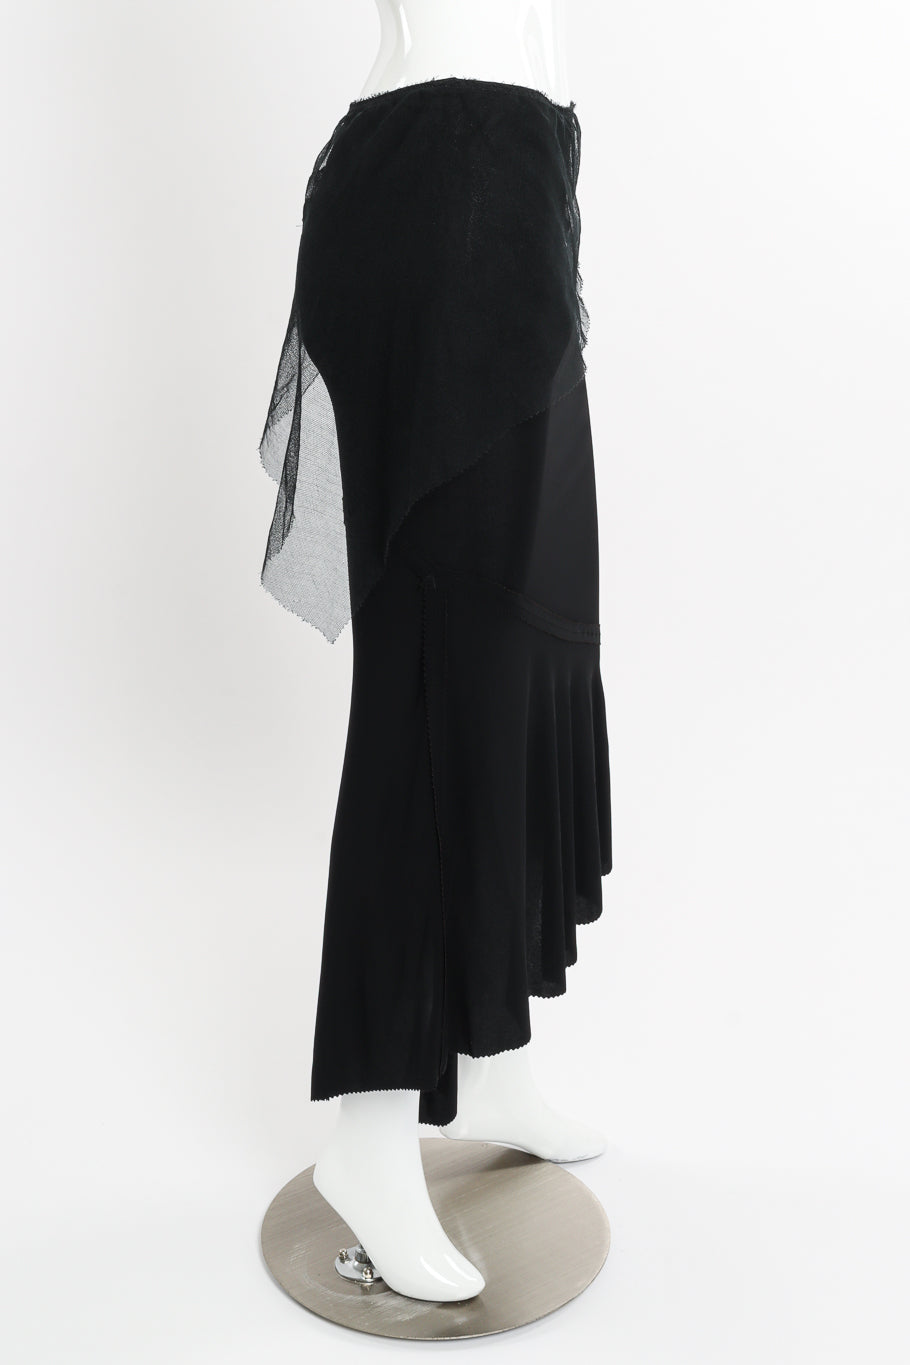 Jean Paul Gaultier Femme Mesh Overlay Ruffle Skirt side on mannequin @recessla